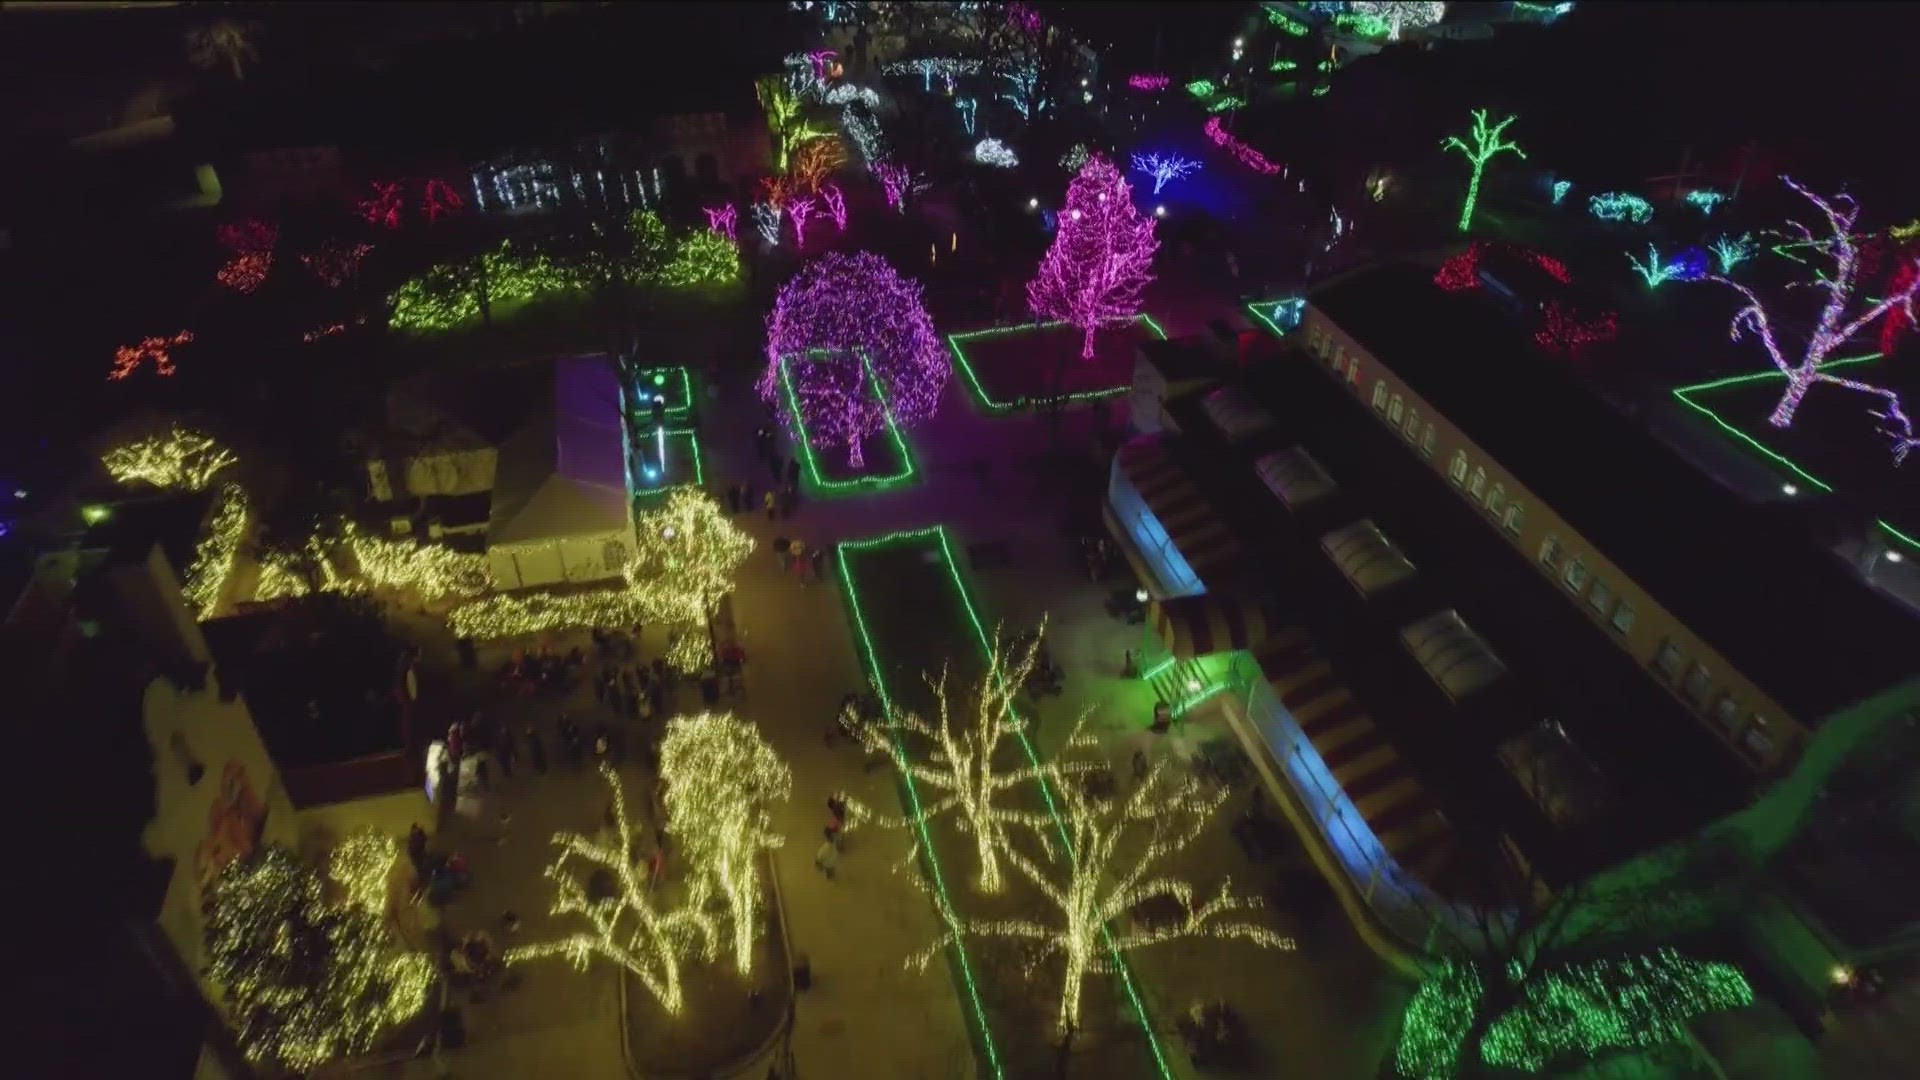 Toledo Zoo Lights Before Christmas brings back classic display